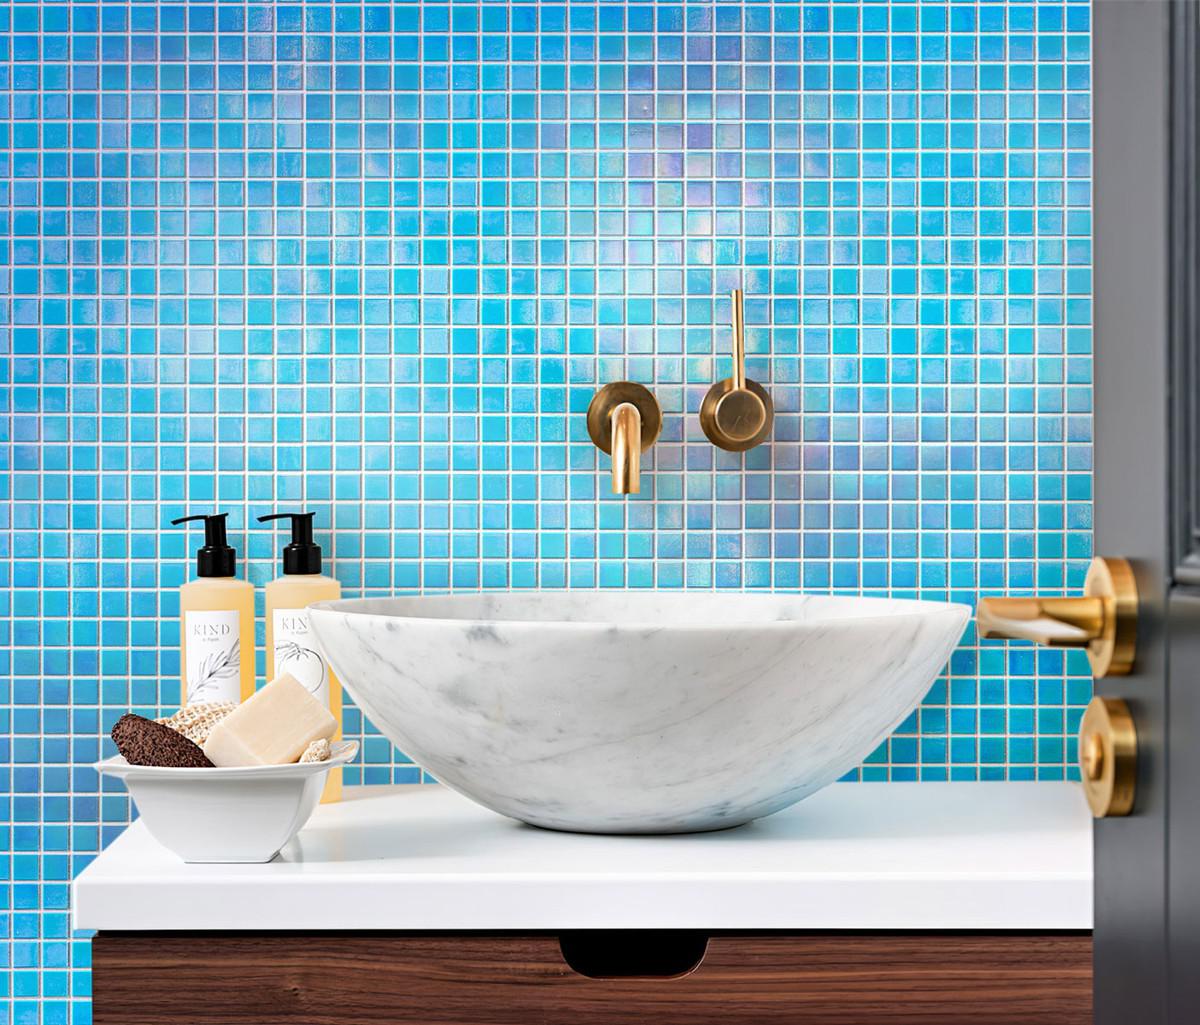 Pearly Ocean Blue Squares Glass Pool Tile Bathroom Backsplash